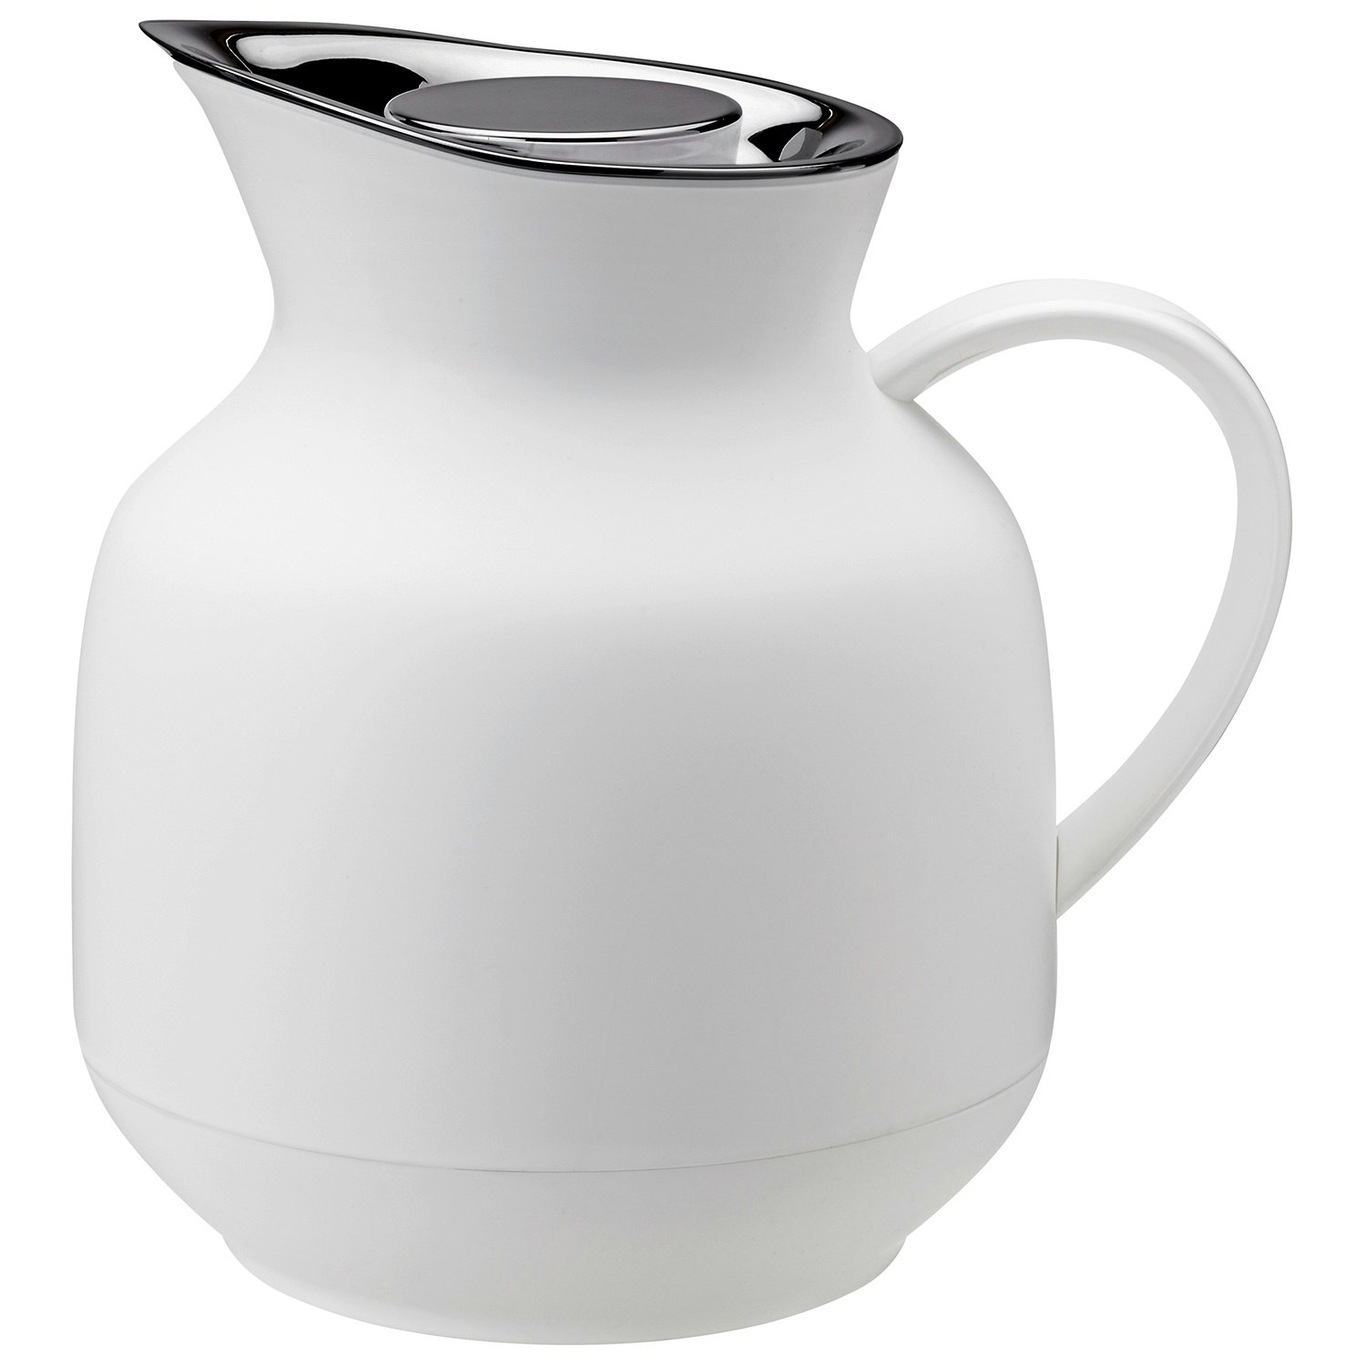 https://royaldesign.com/image/2/stelton-amphora-teapot-1-l-1?w=800&quality=80